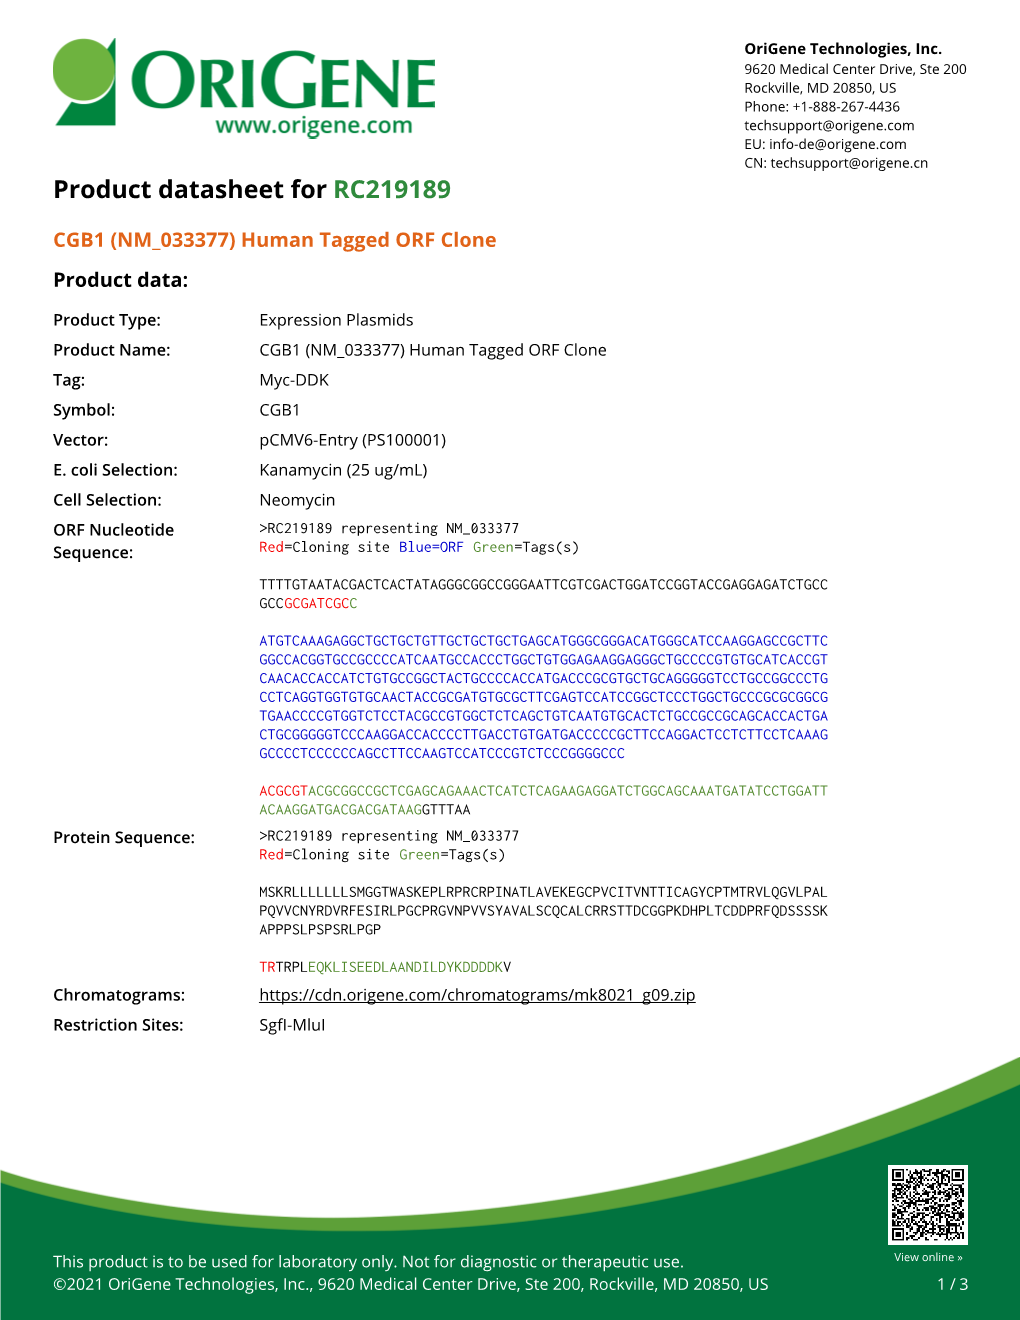 CGB1 (NM 033377) Human Tagged ORF Clone Product Data